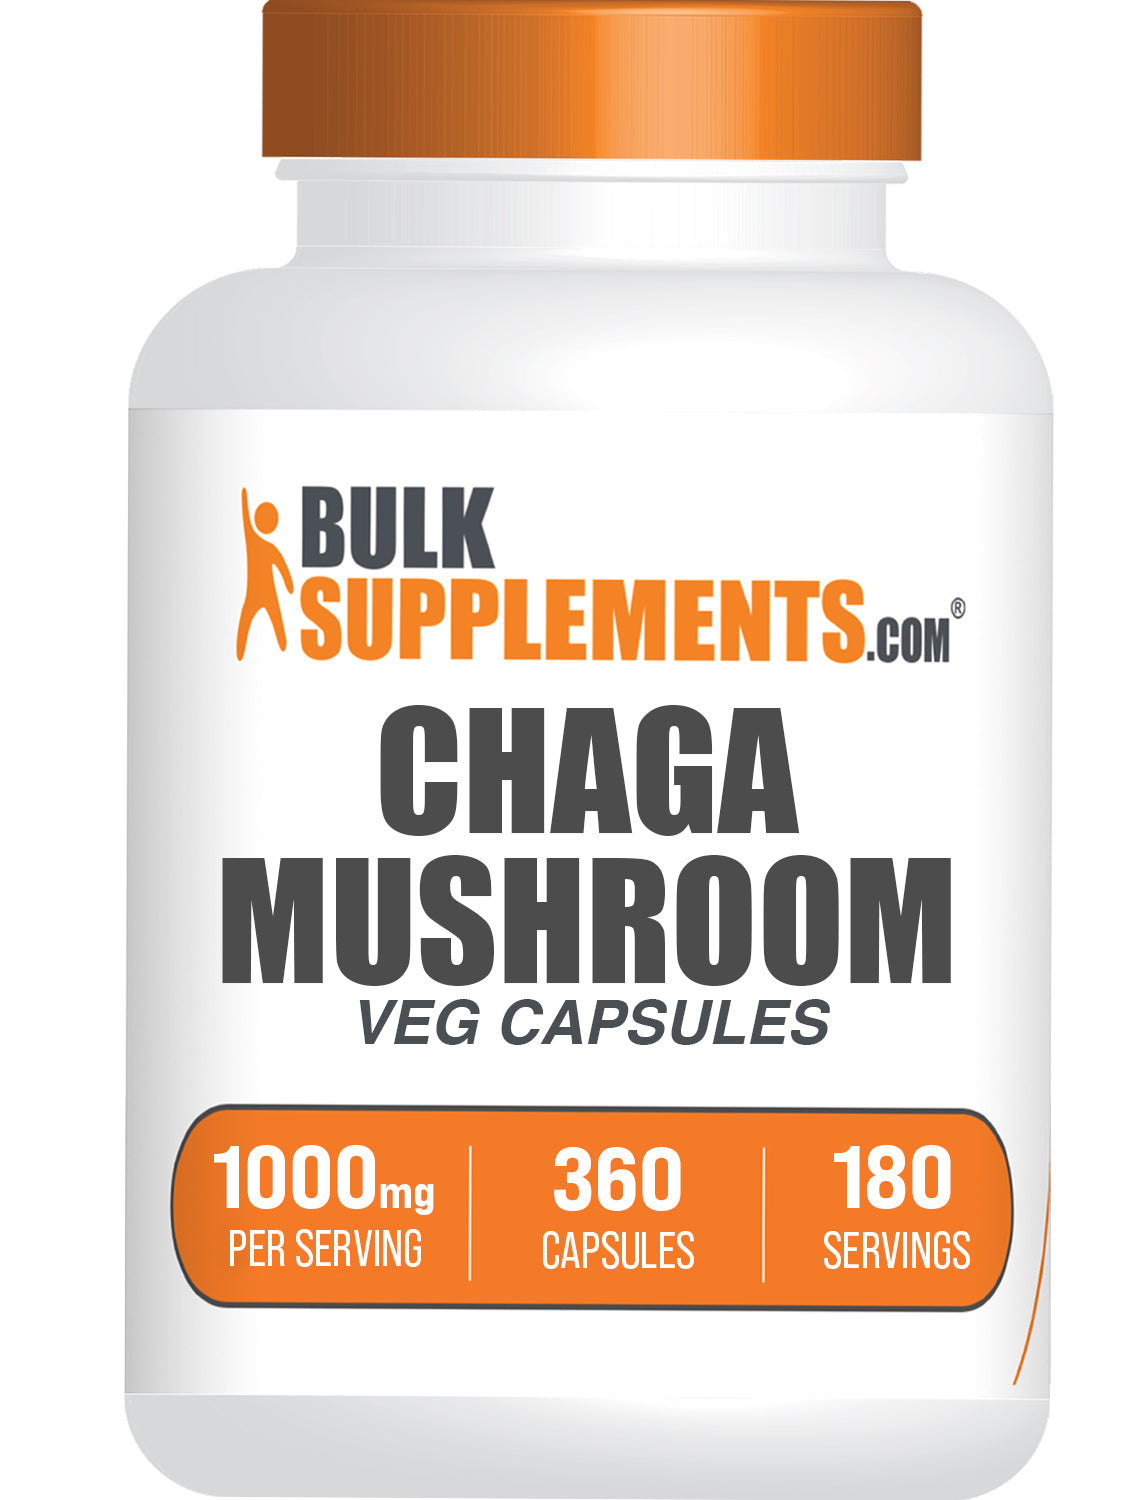 Chaga Mushroom 360 ct Capsules Bottle